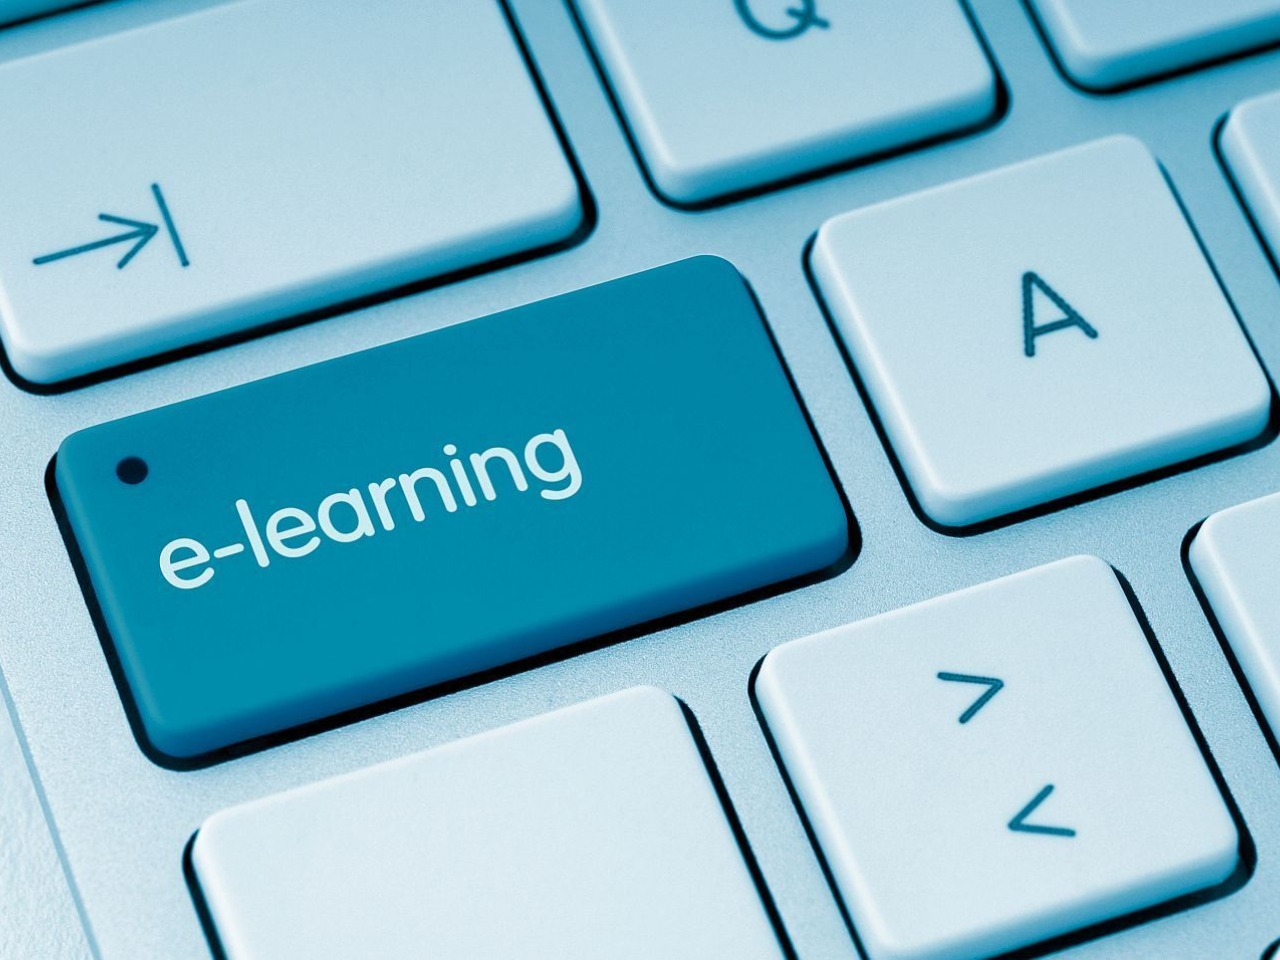 Code 95 e-learning